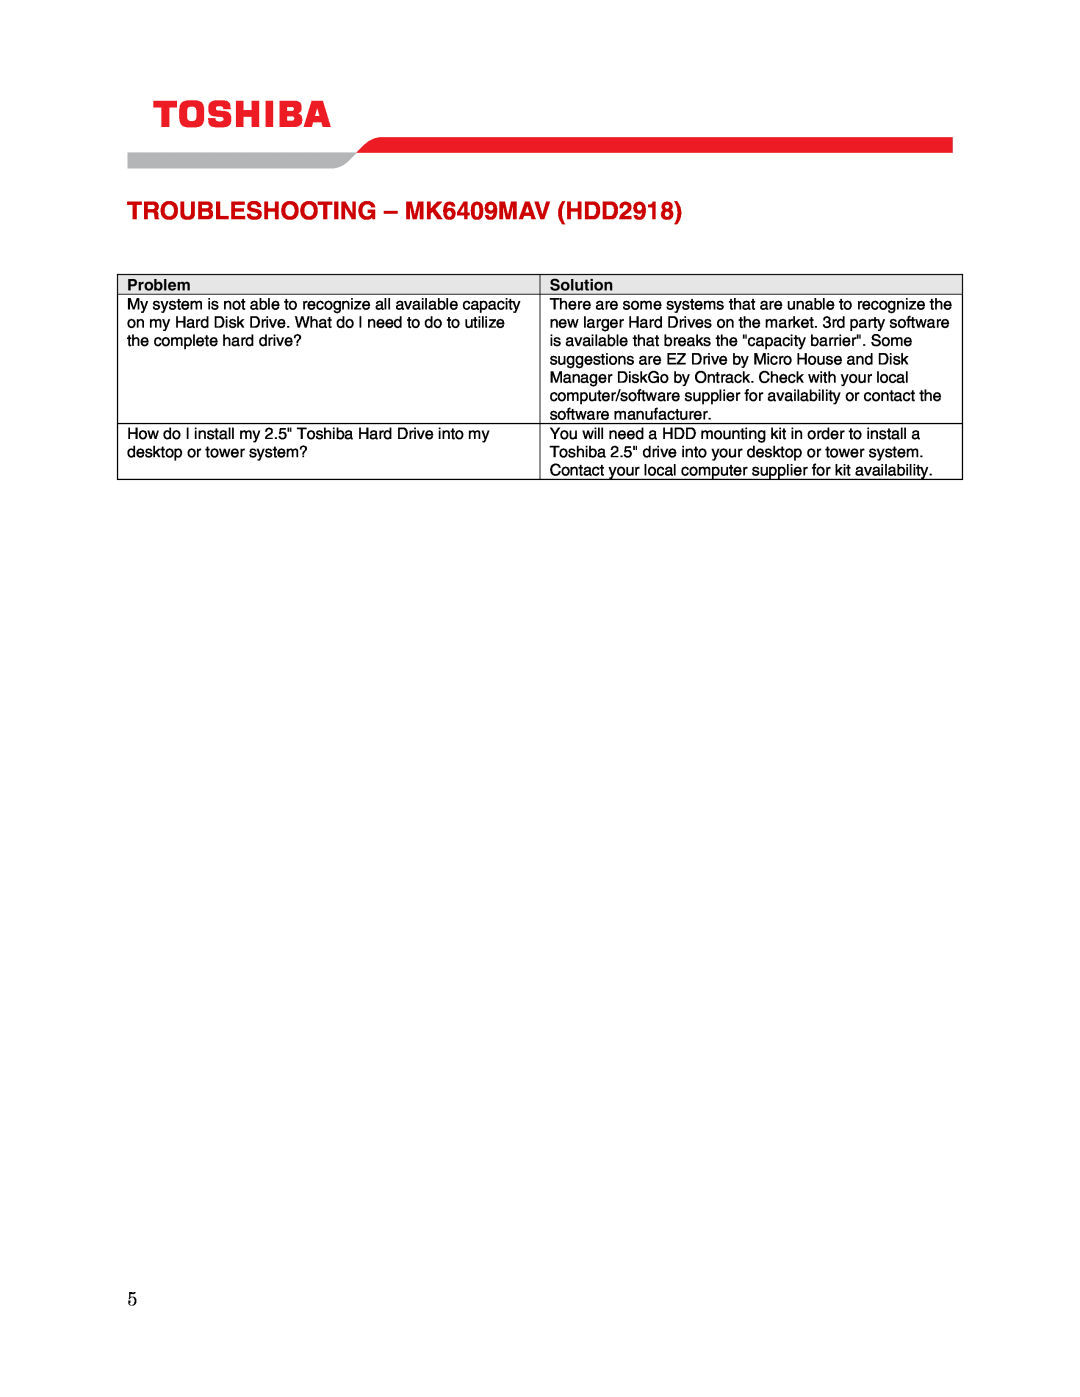 Toshiba user manual TROUBLESHOOTING - MK6409MAV HDD2918, Problem, Solution 